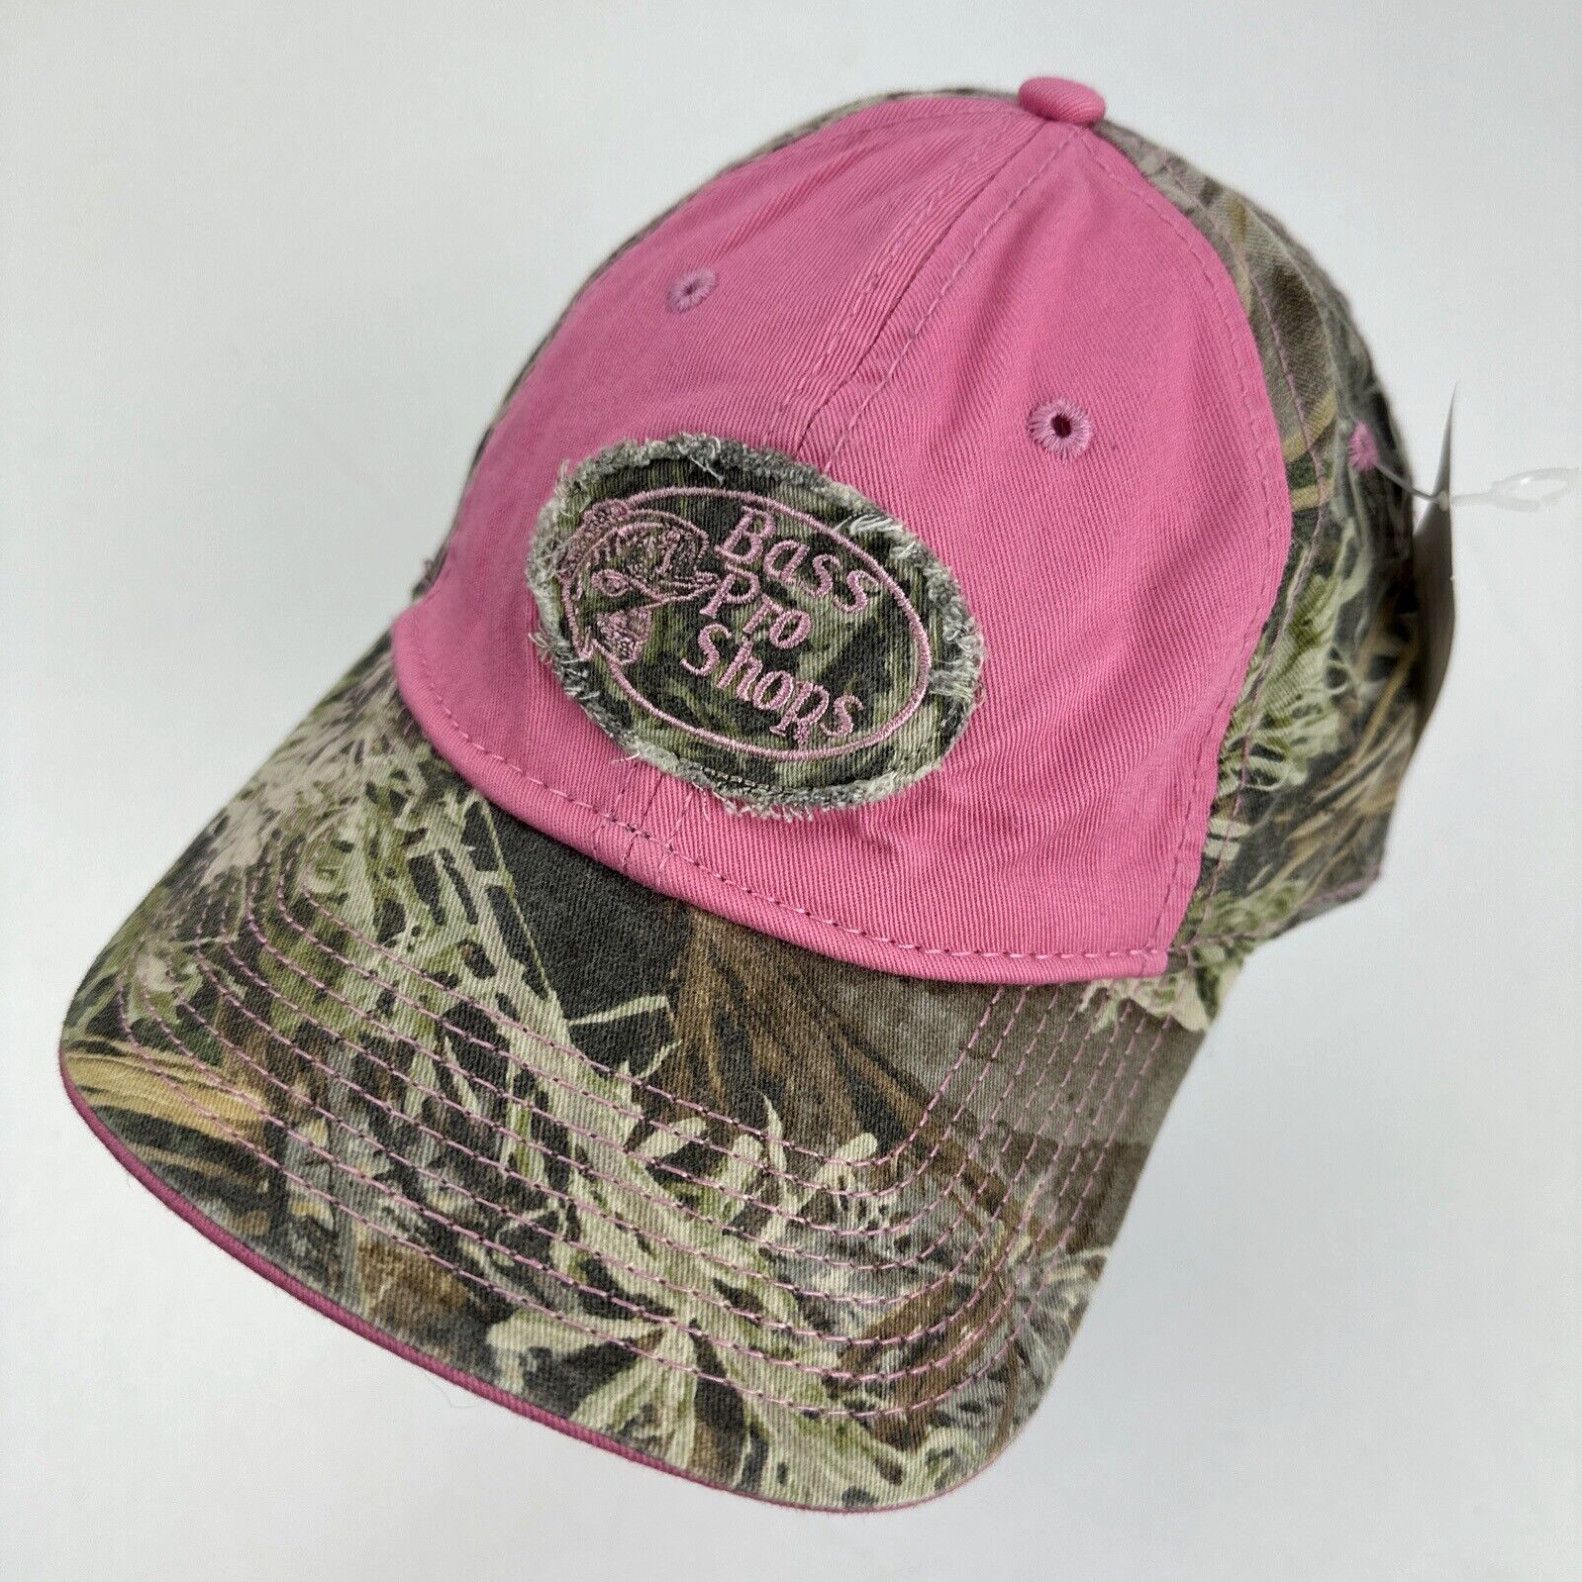 Bass Pro Shops Bass Pro Shops Womens Pink Camouflage Ball Cap Hat